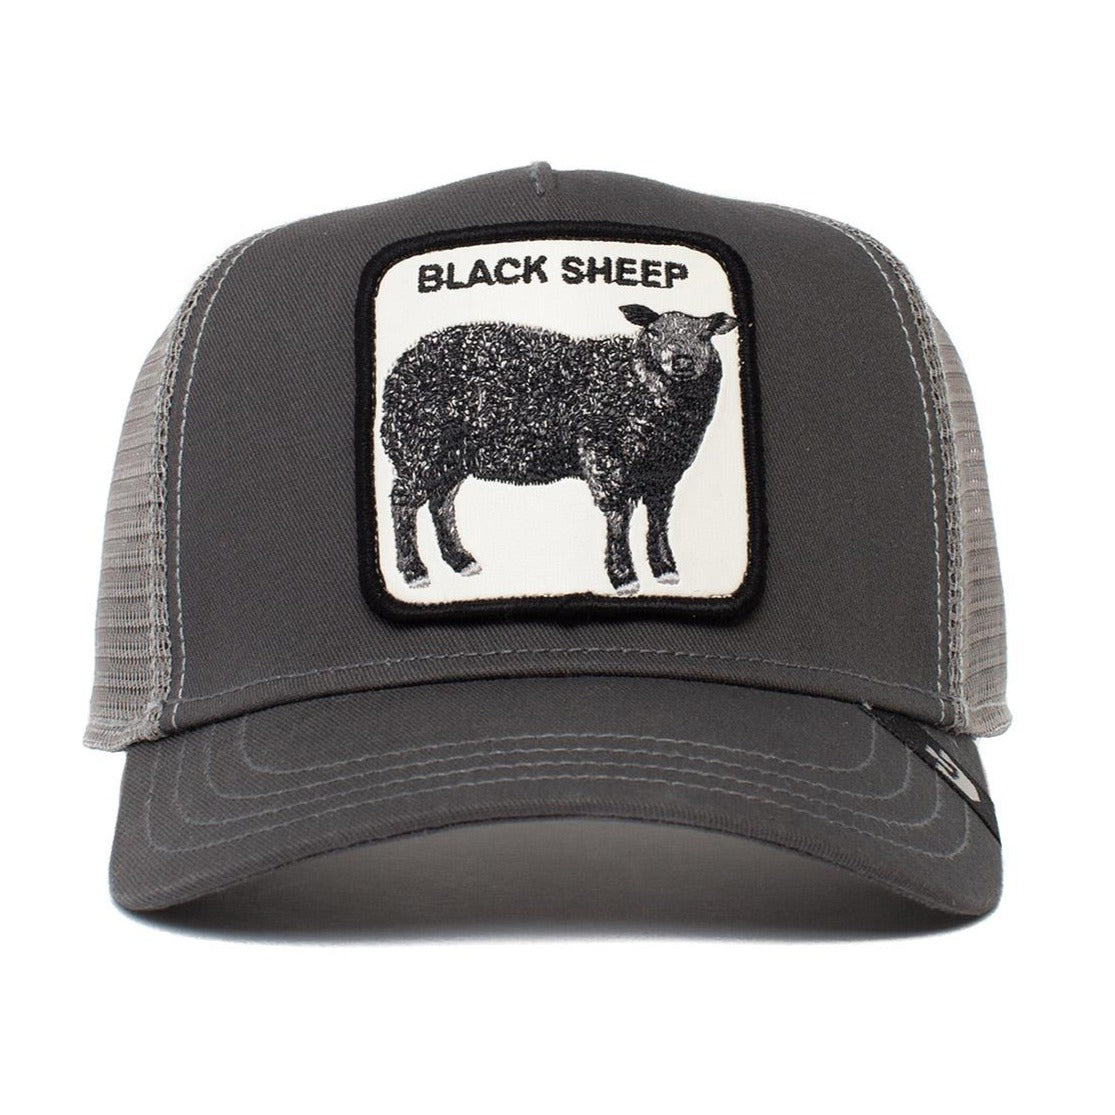 Goorin Black Sheep (Shippe) כובע גורין כבשה שחורה